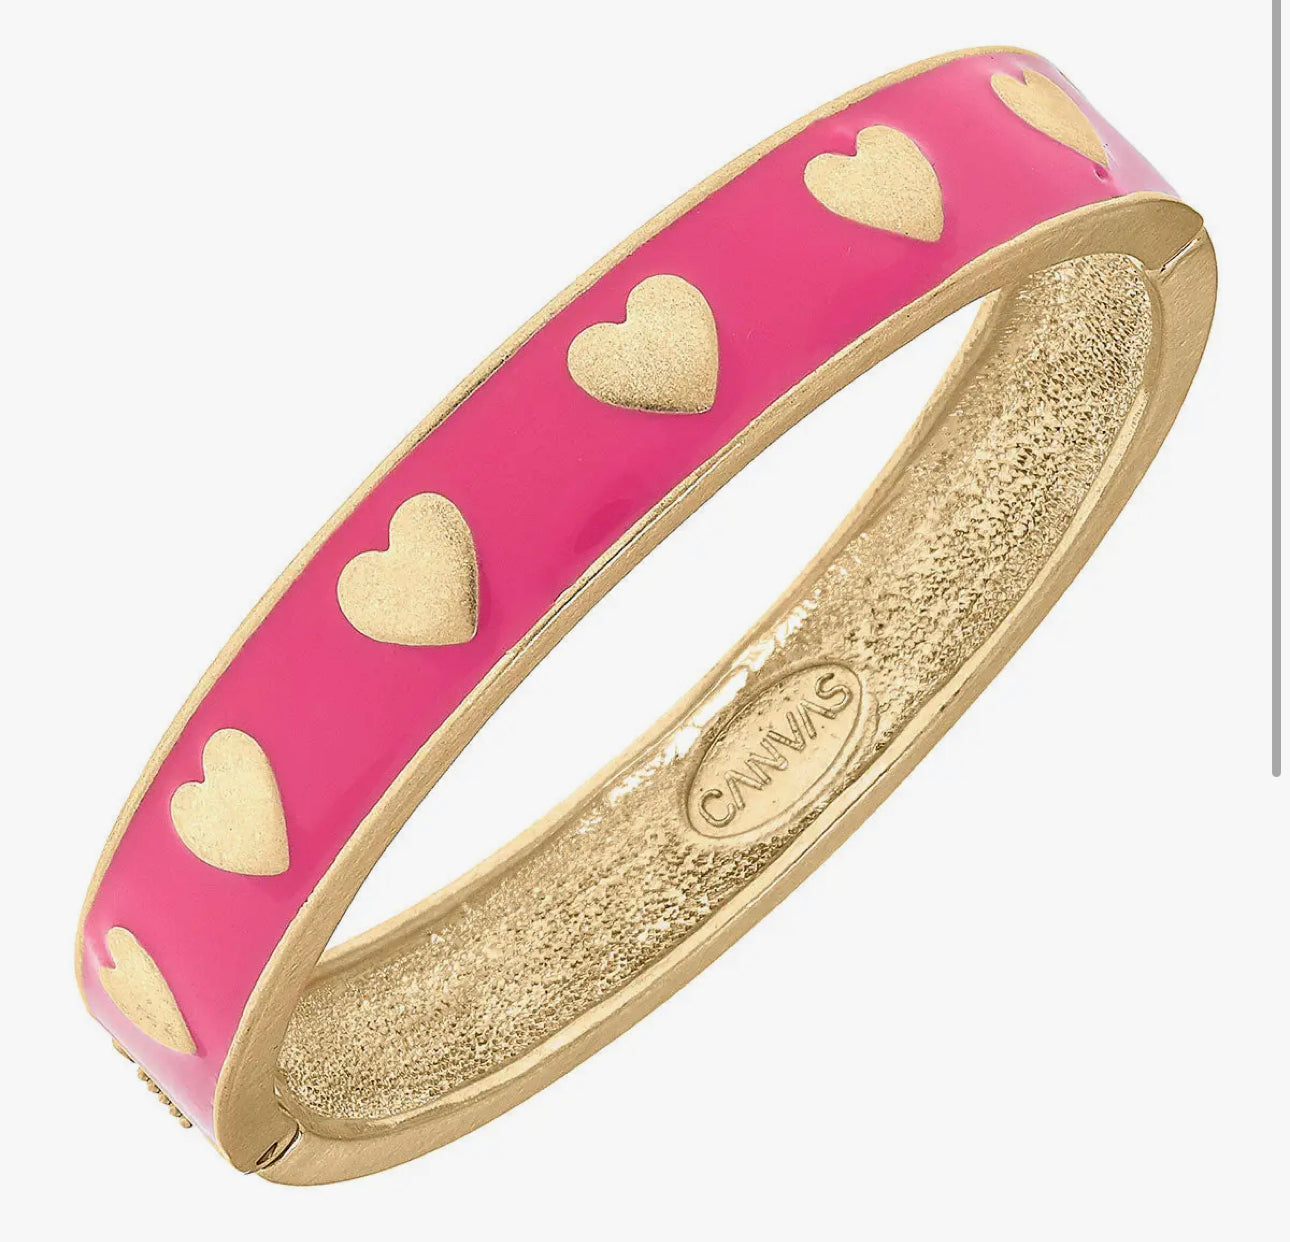 Heart bangle bracelet